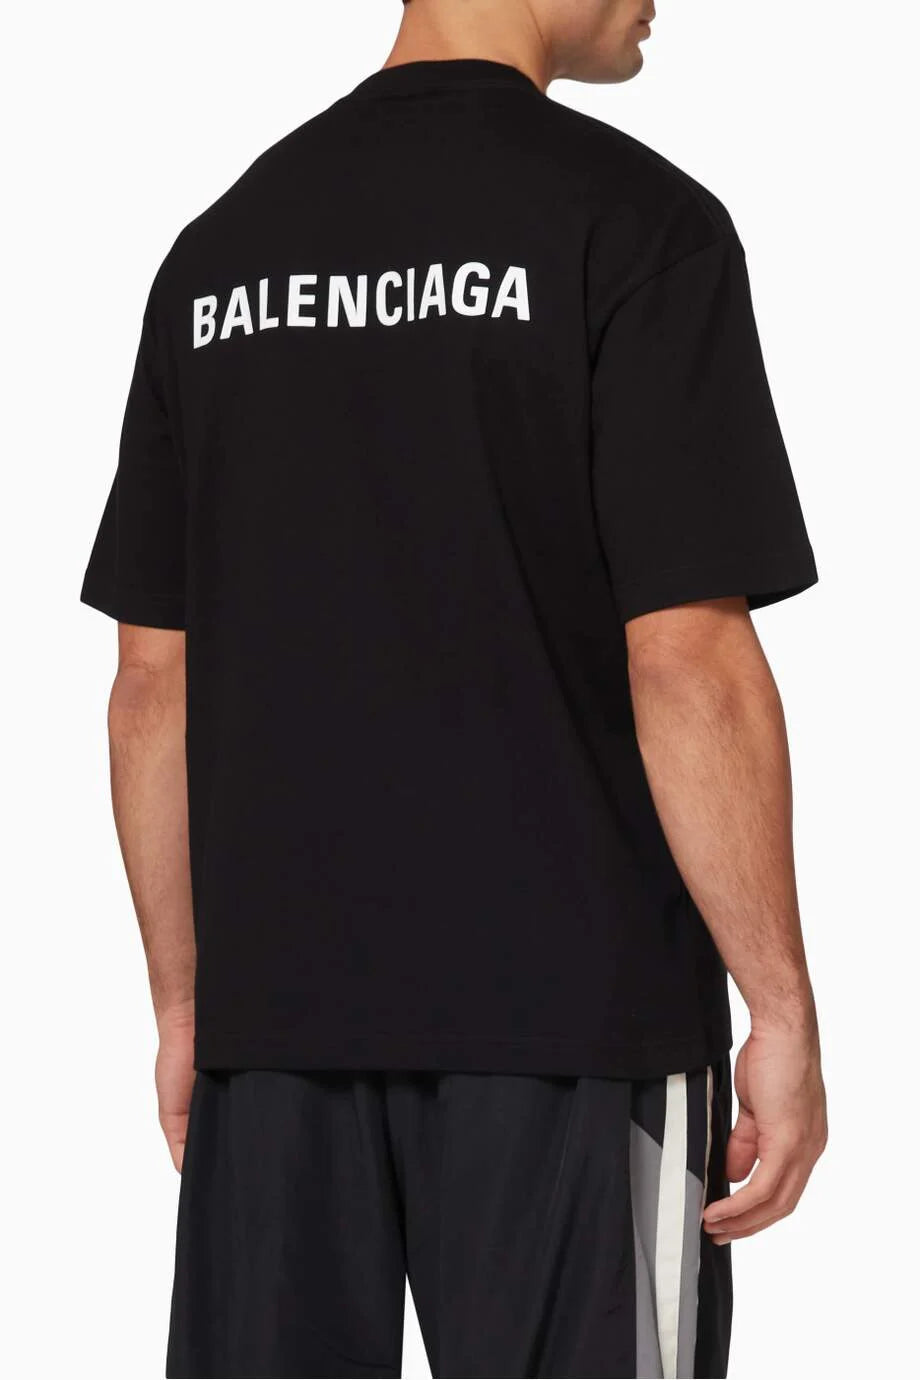 BALENCIAGANEW Logo Medium Fit T-shirt in Cotton Jersey